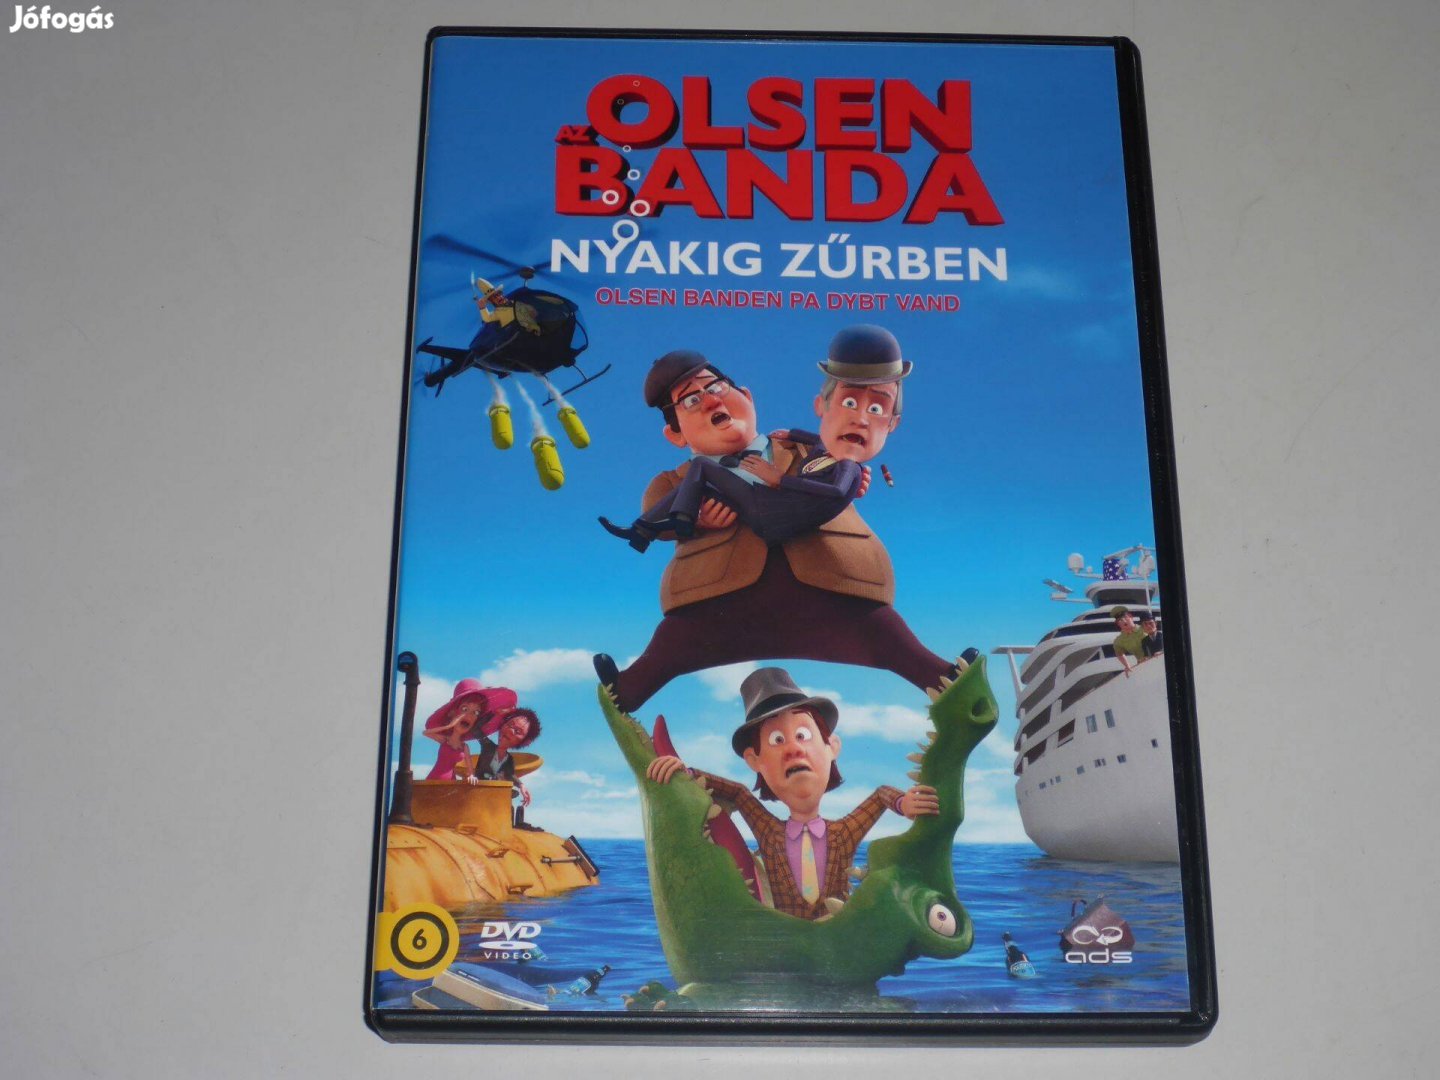 Az Olsen banda nyakig zűrben DVD film ;